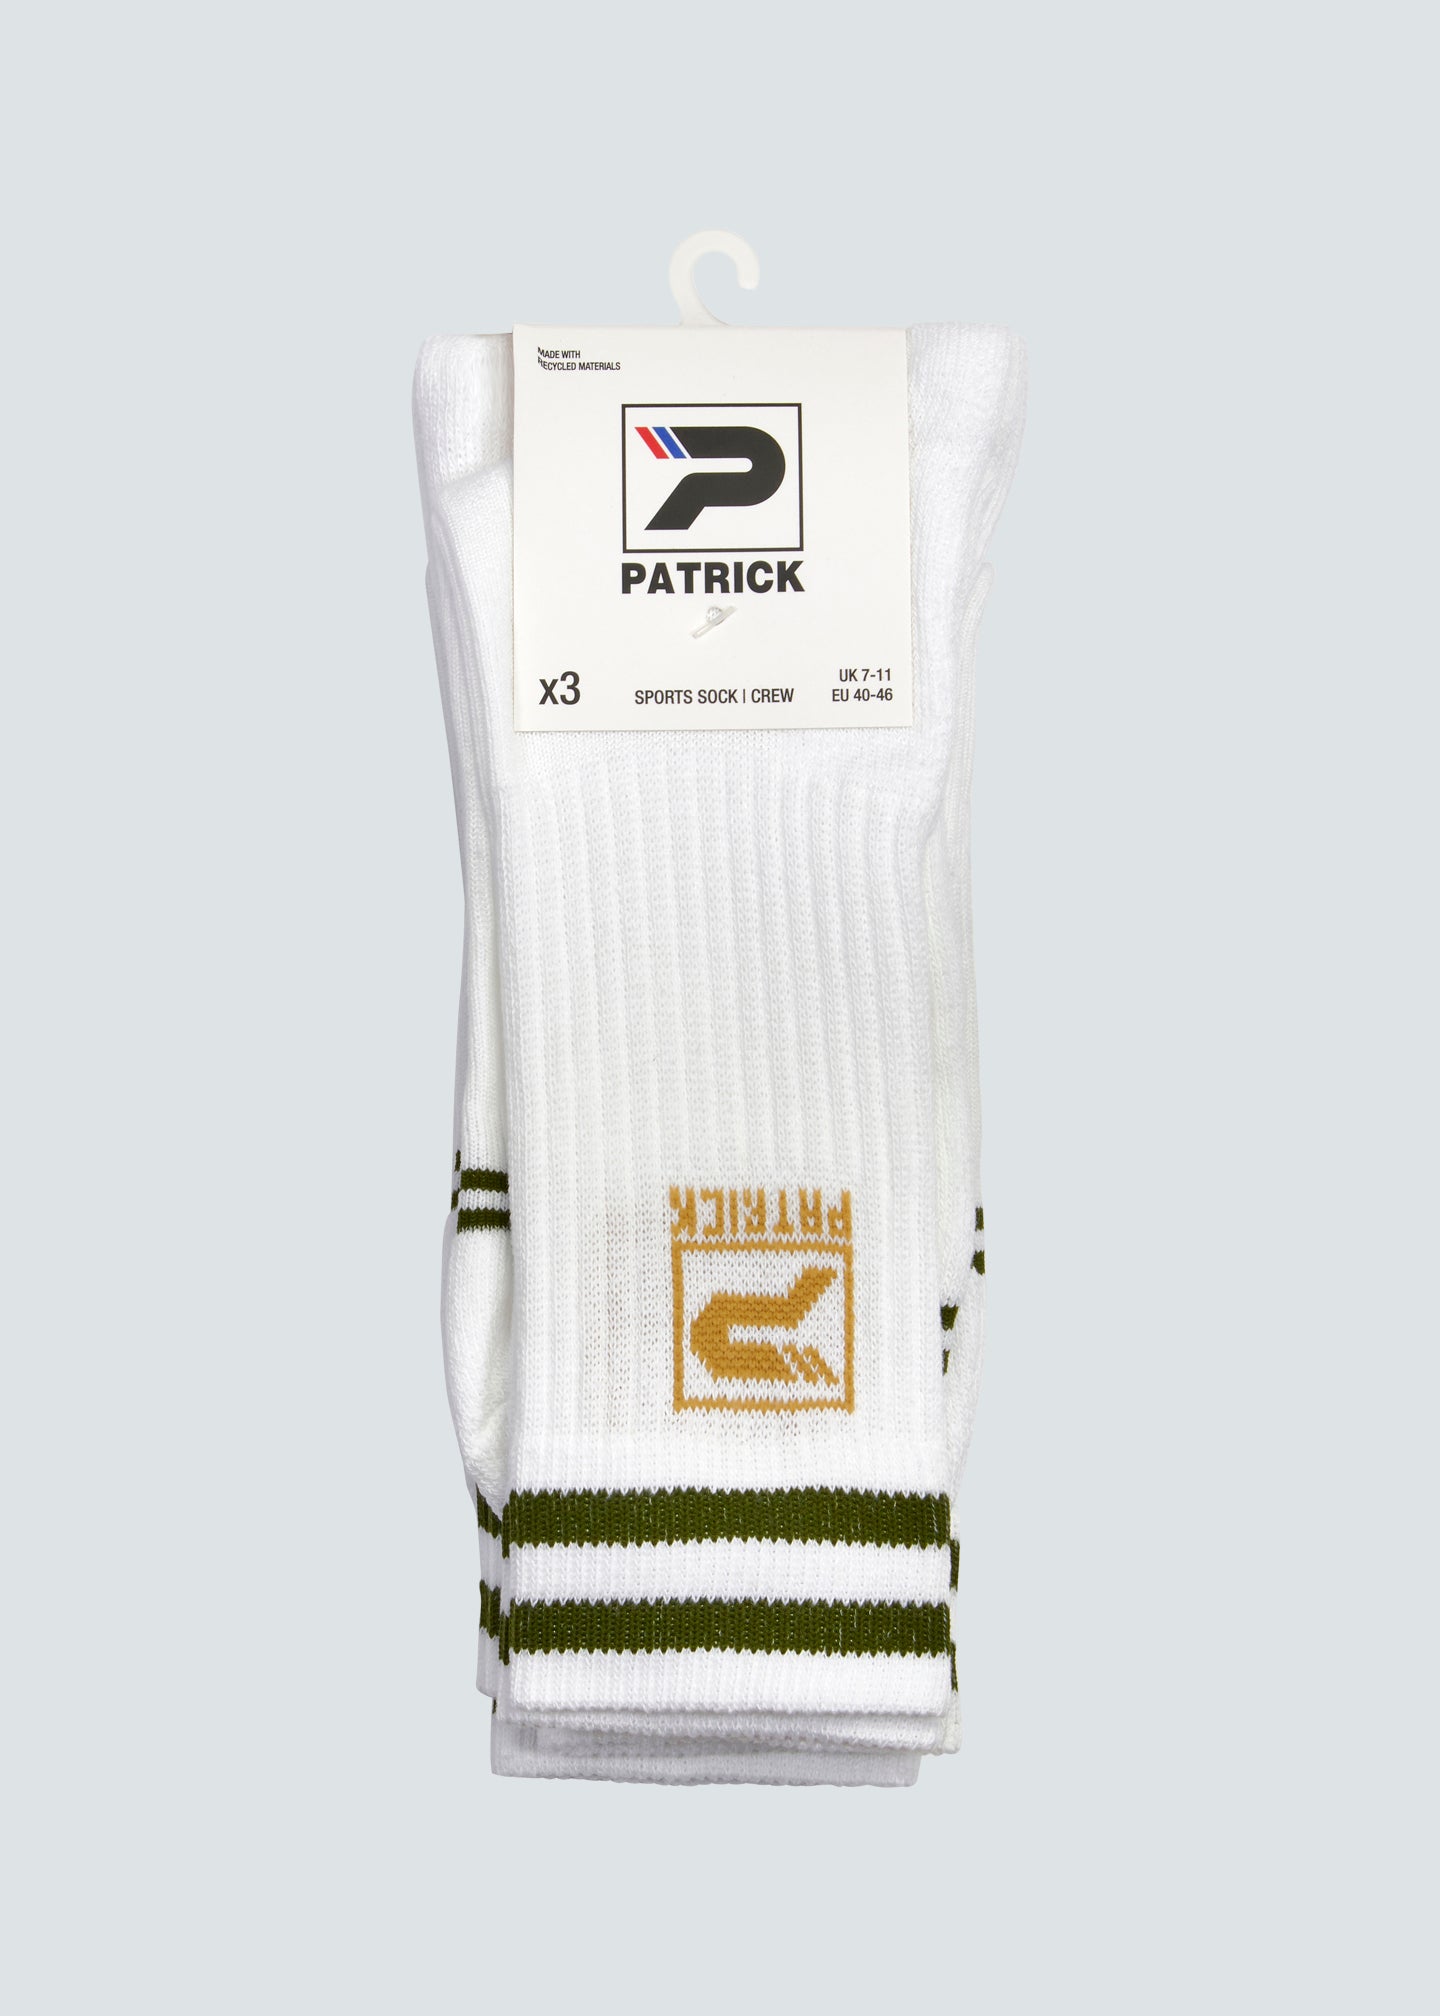 Rio Crew Sock 3 Pack - White/Dark Green